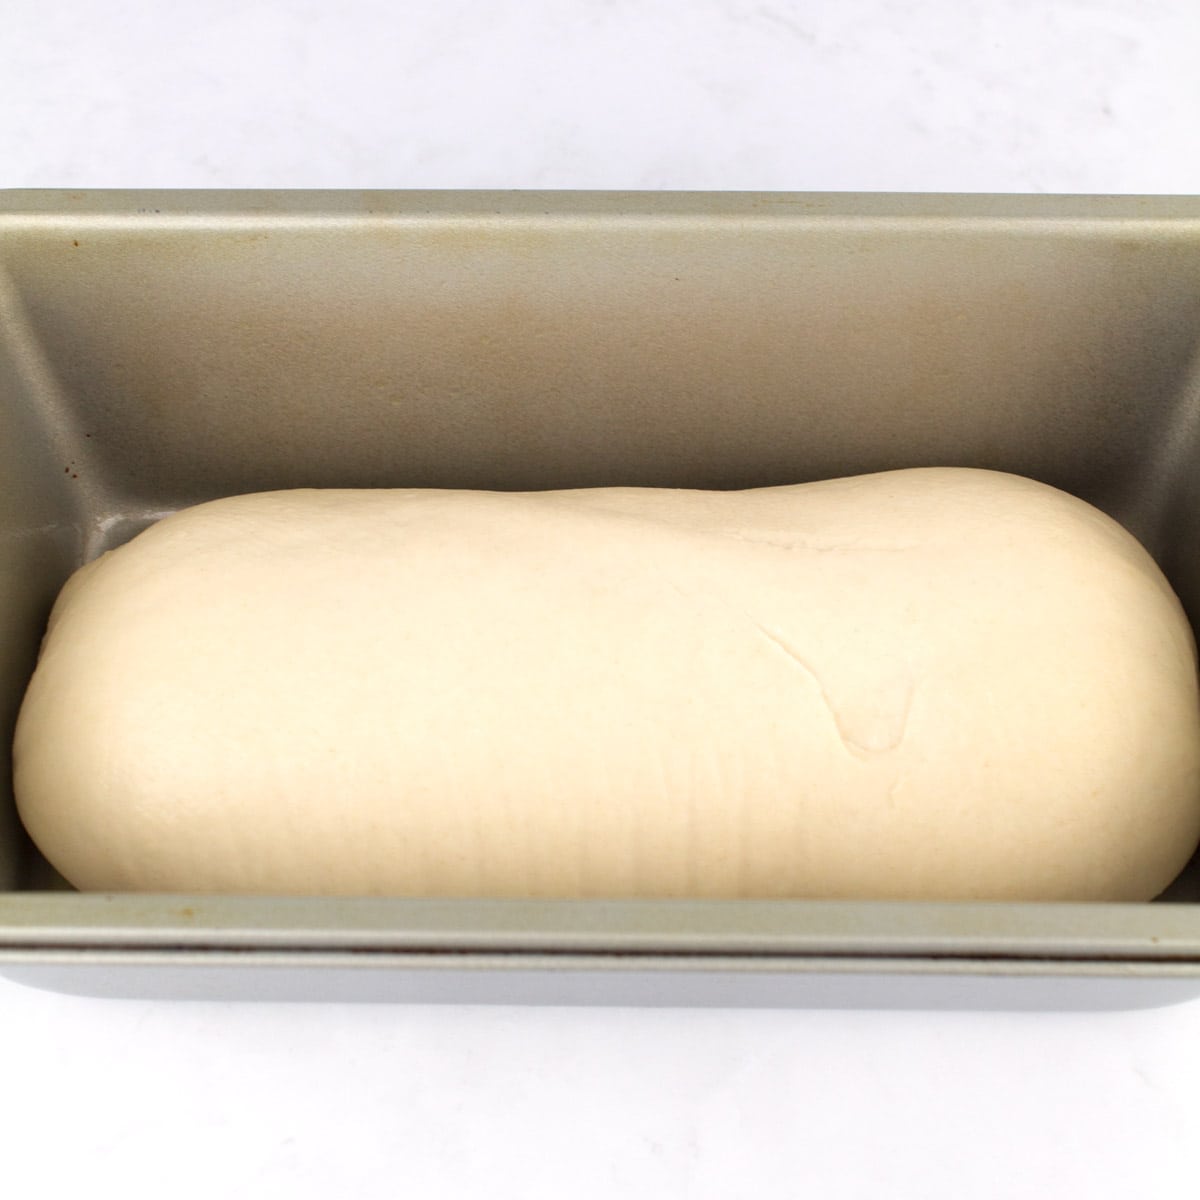 Frozen Rhodes bread dough thawed before adding herb garlic butter.